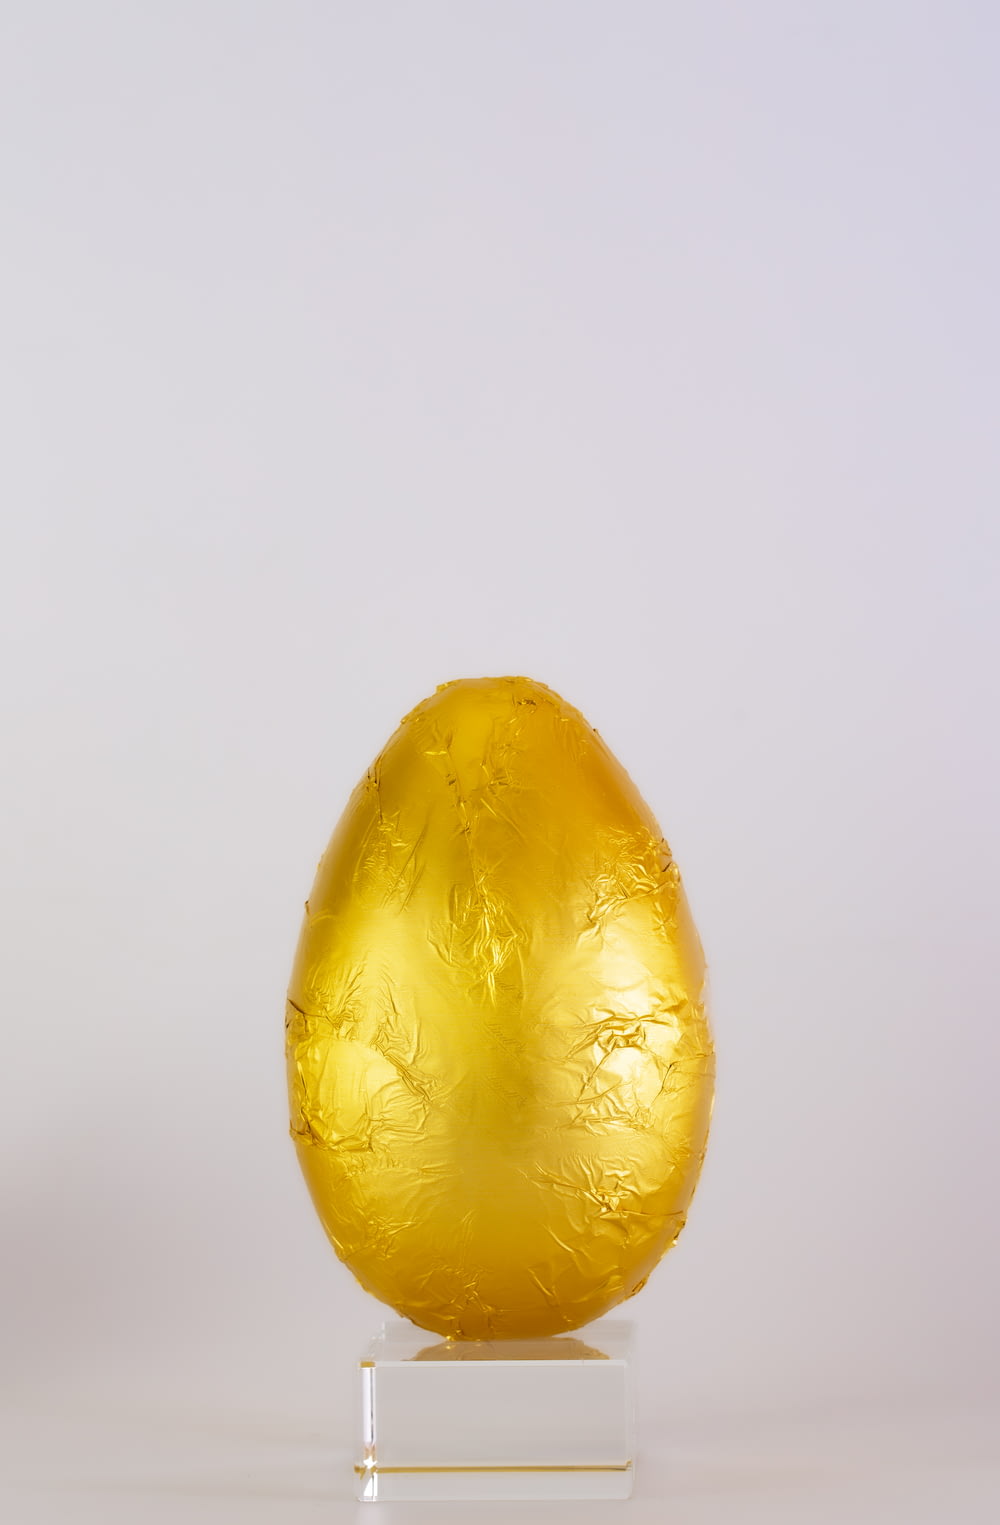 yellow fruit on white surface